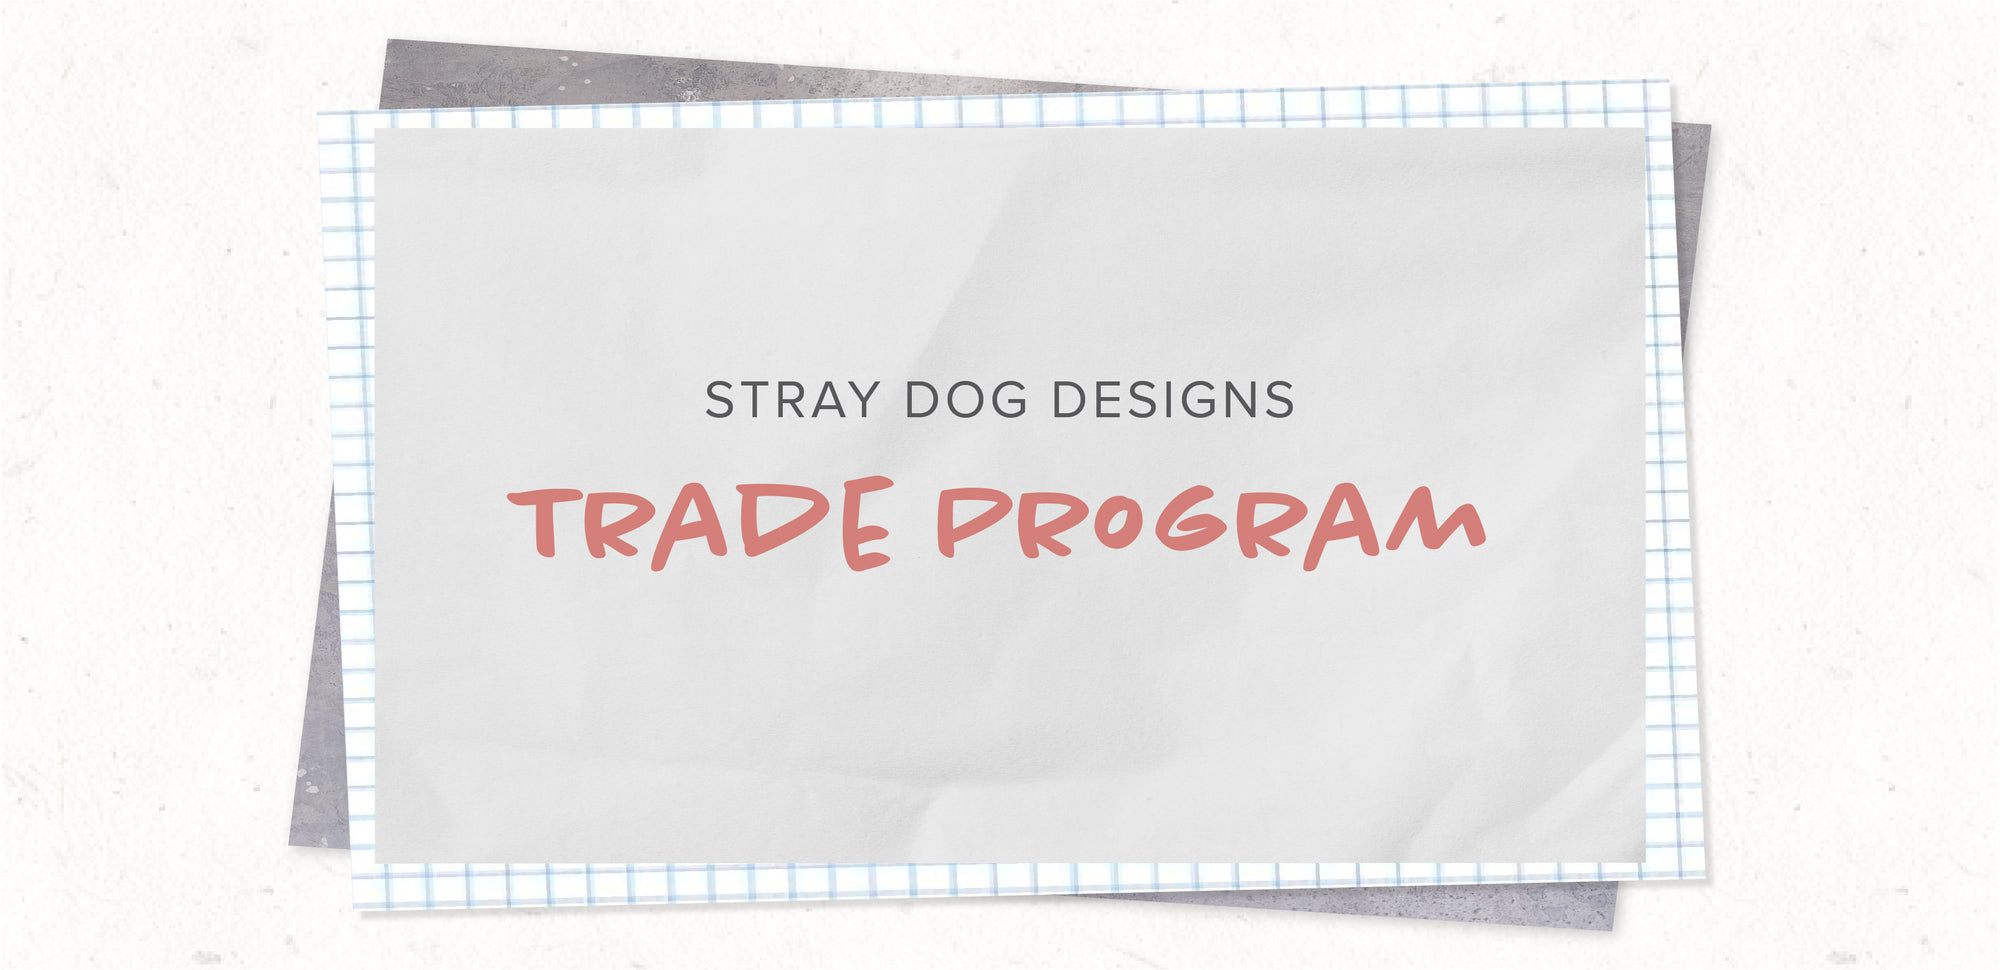 The Stray Dog Designs Trade Program